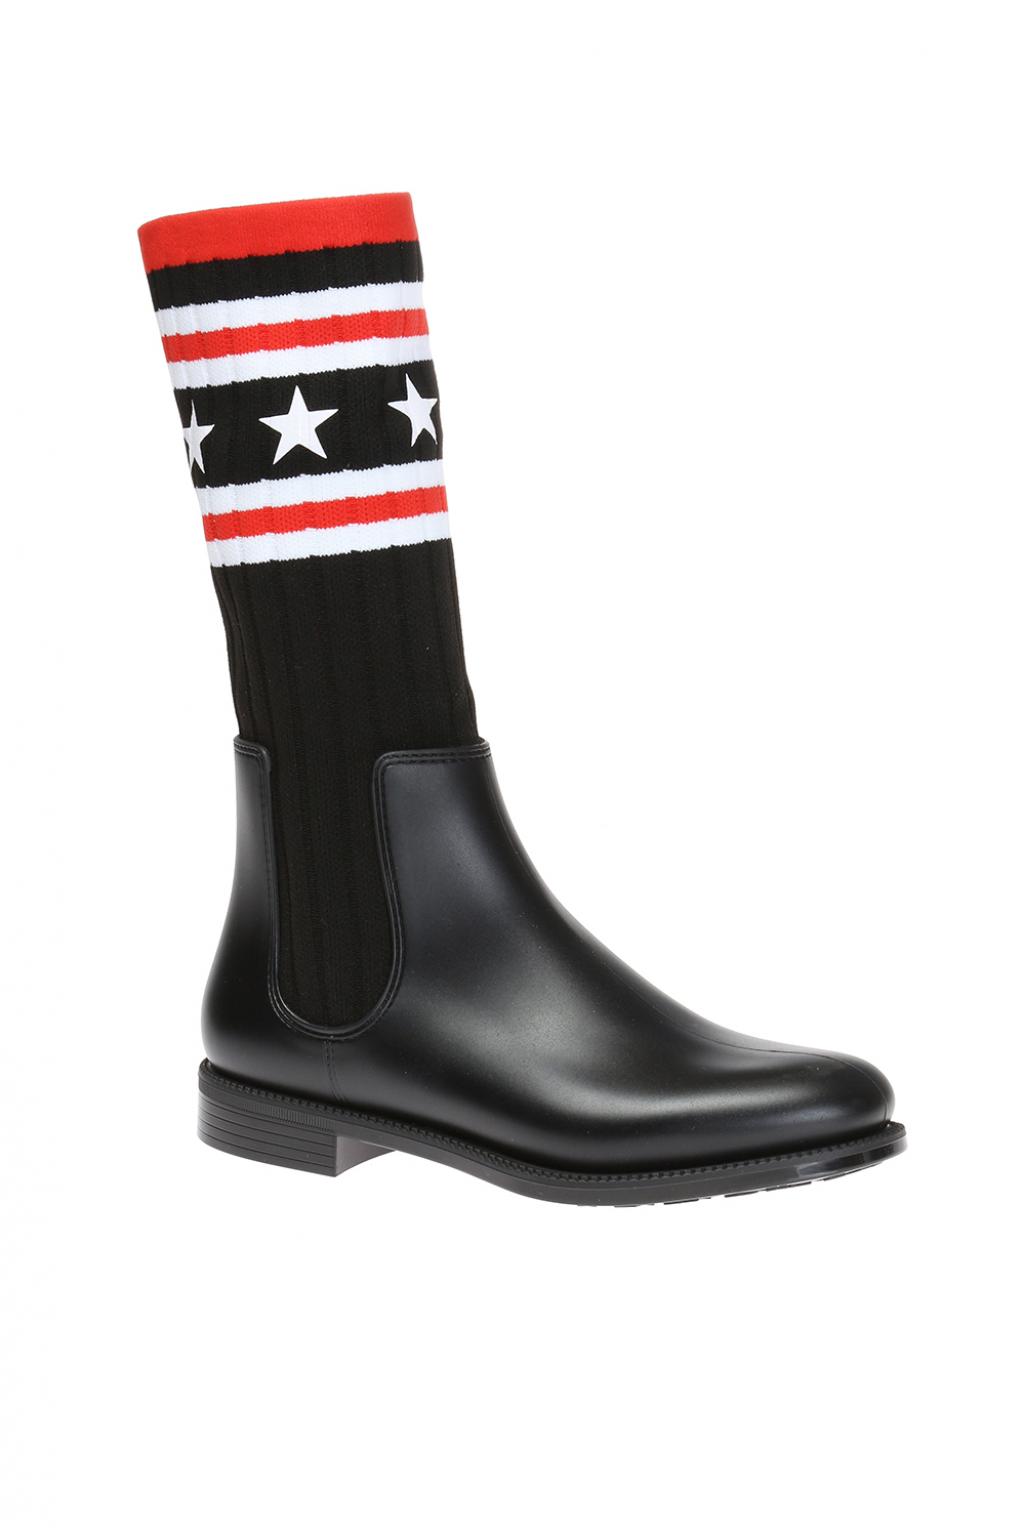 givenchy sock rain boots